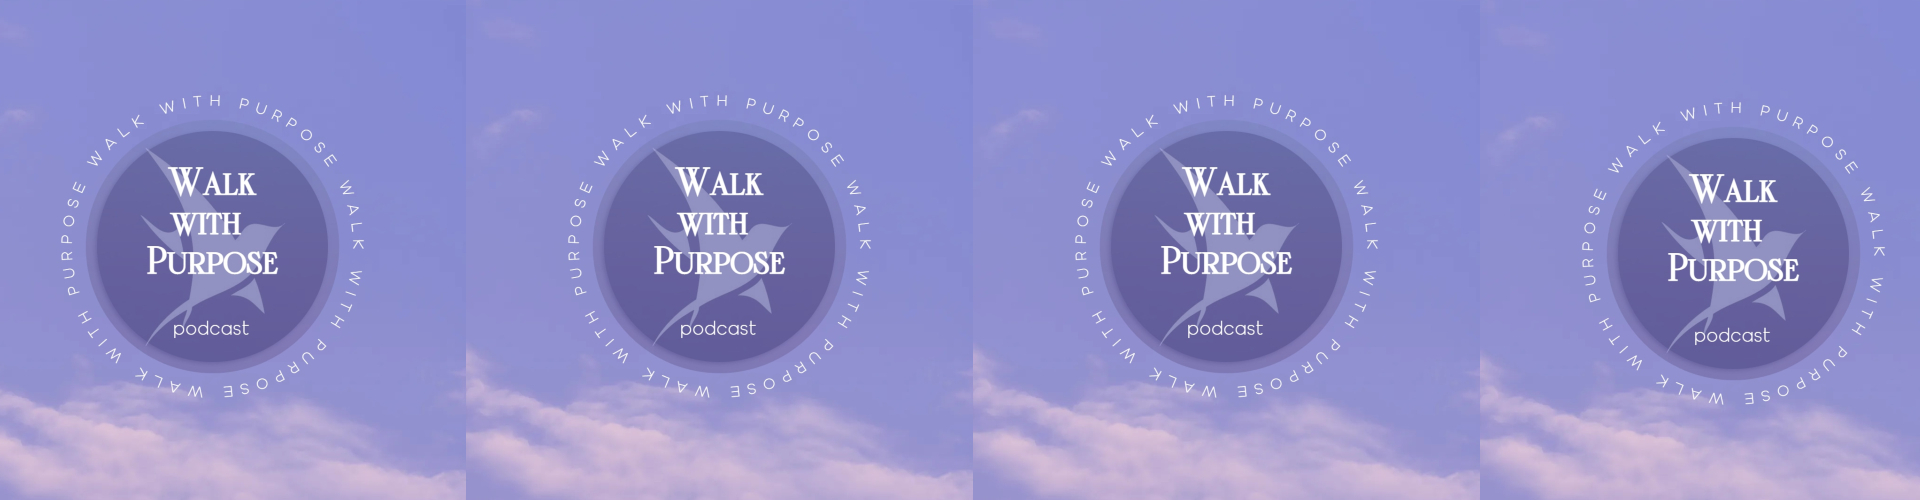 Walk with Purpose